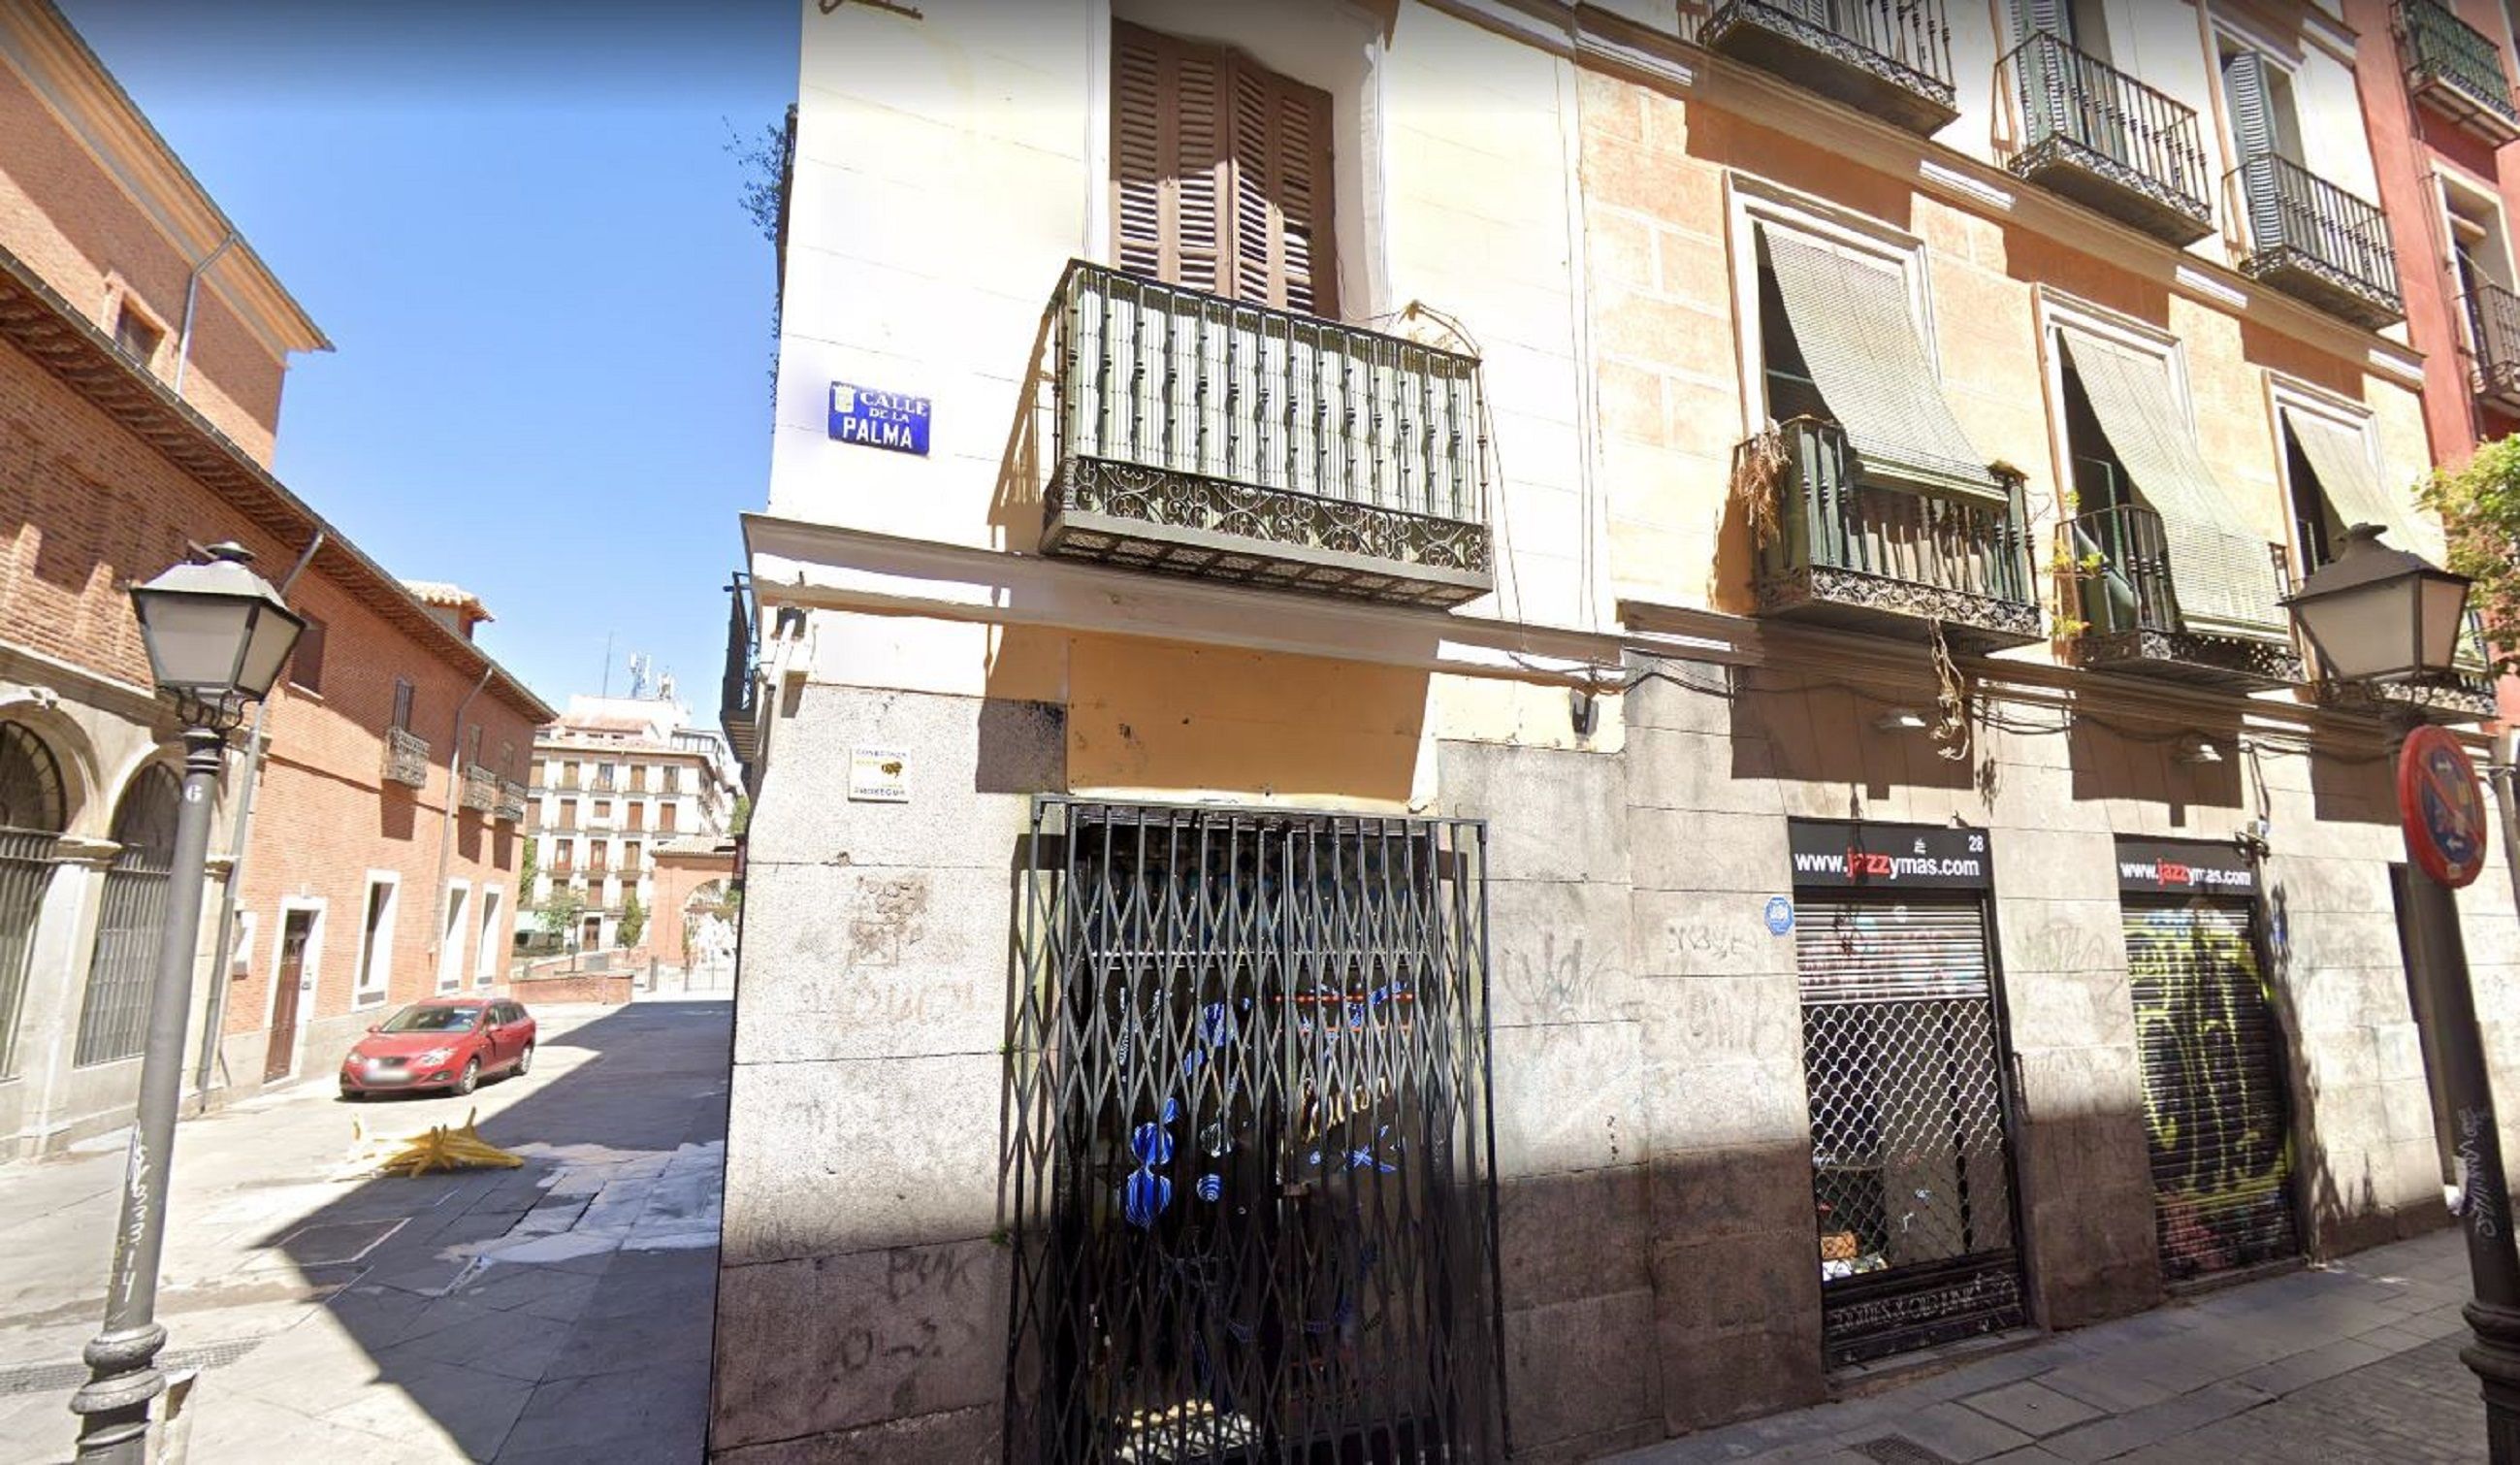 Calle Palma Malasaña Madrid / Google Maps